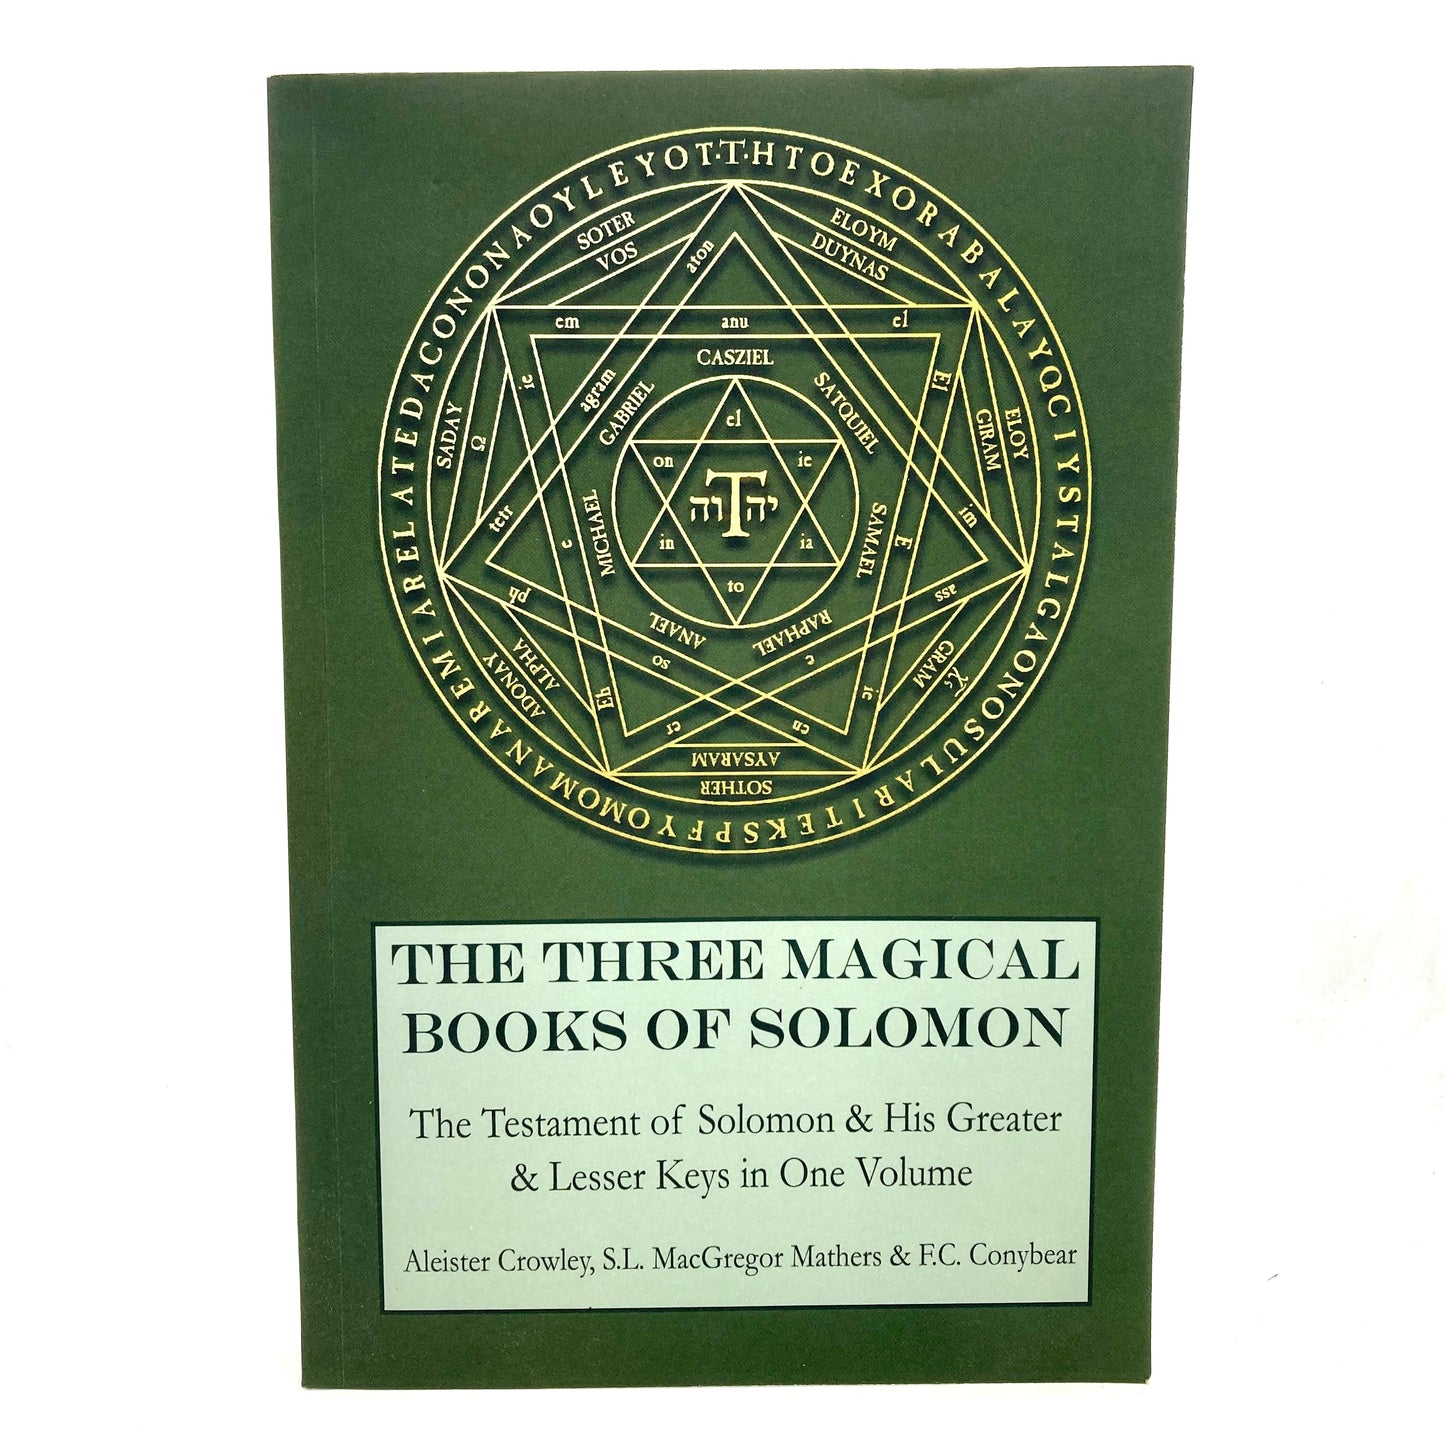 CROWLEY, Aleister "The Three Magical Books of Solomon" [Mockingbird Press, 2017]